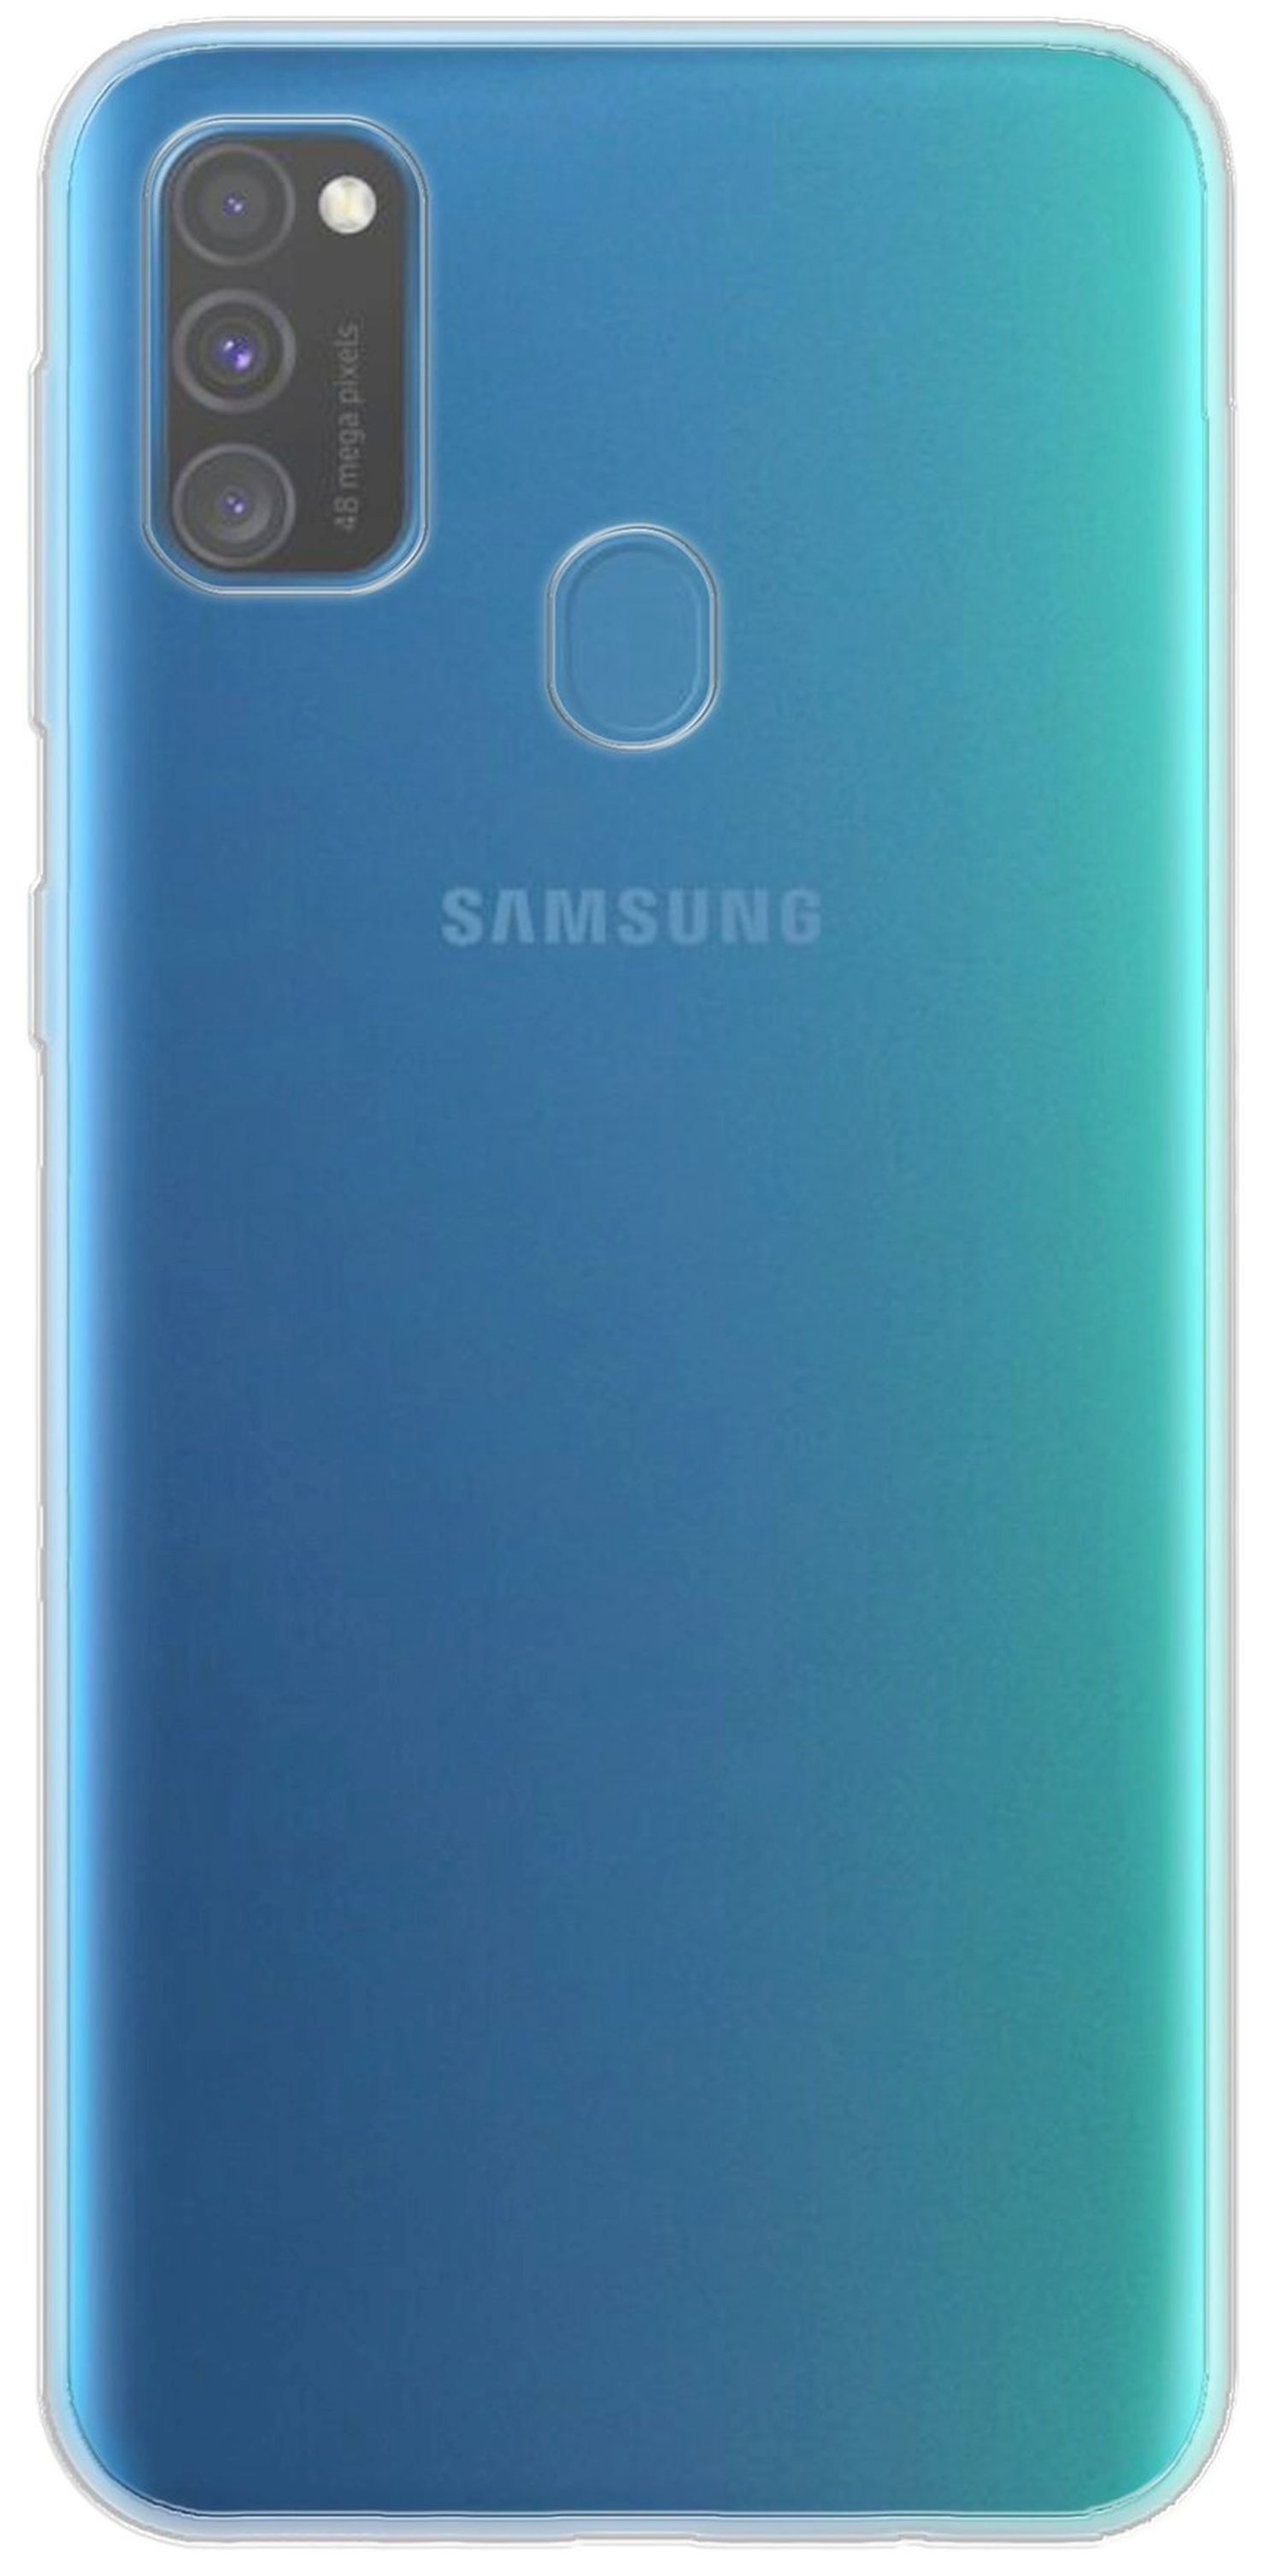 COFI Basic Galaxy Cover, Transparent M21, Samsung, Bumper